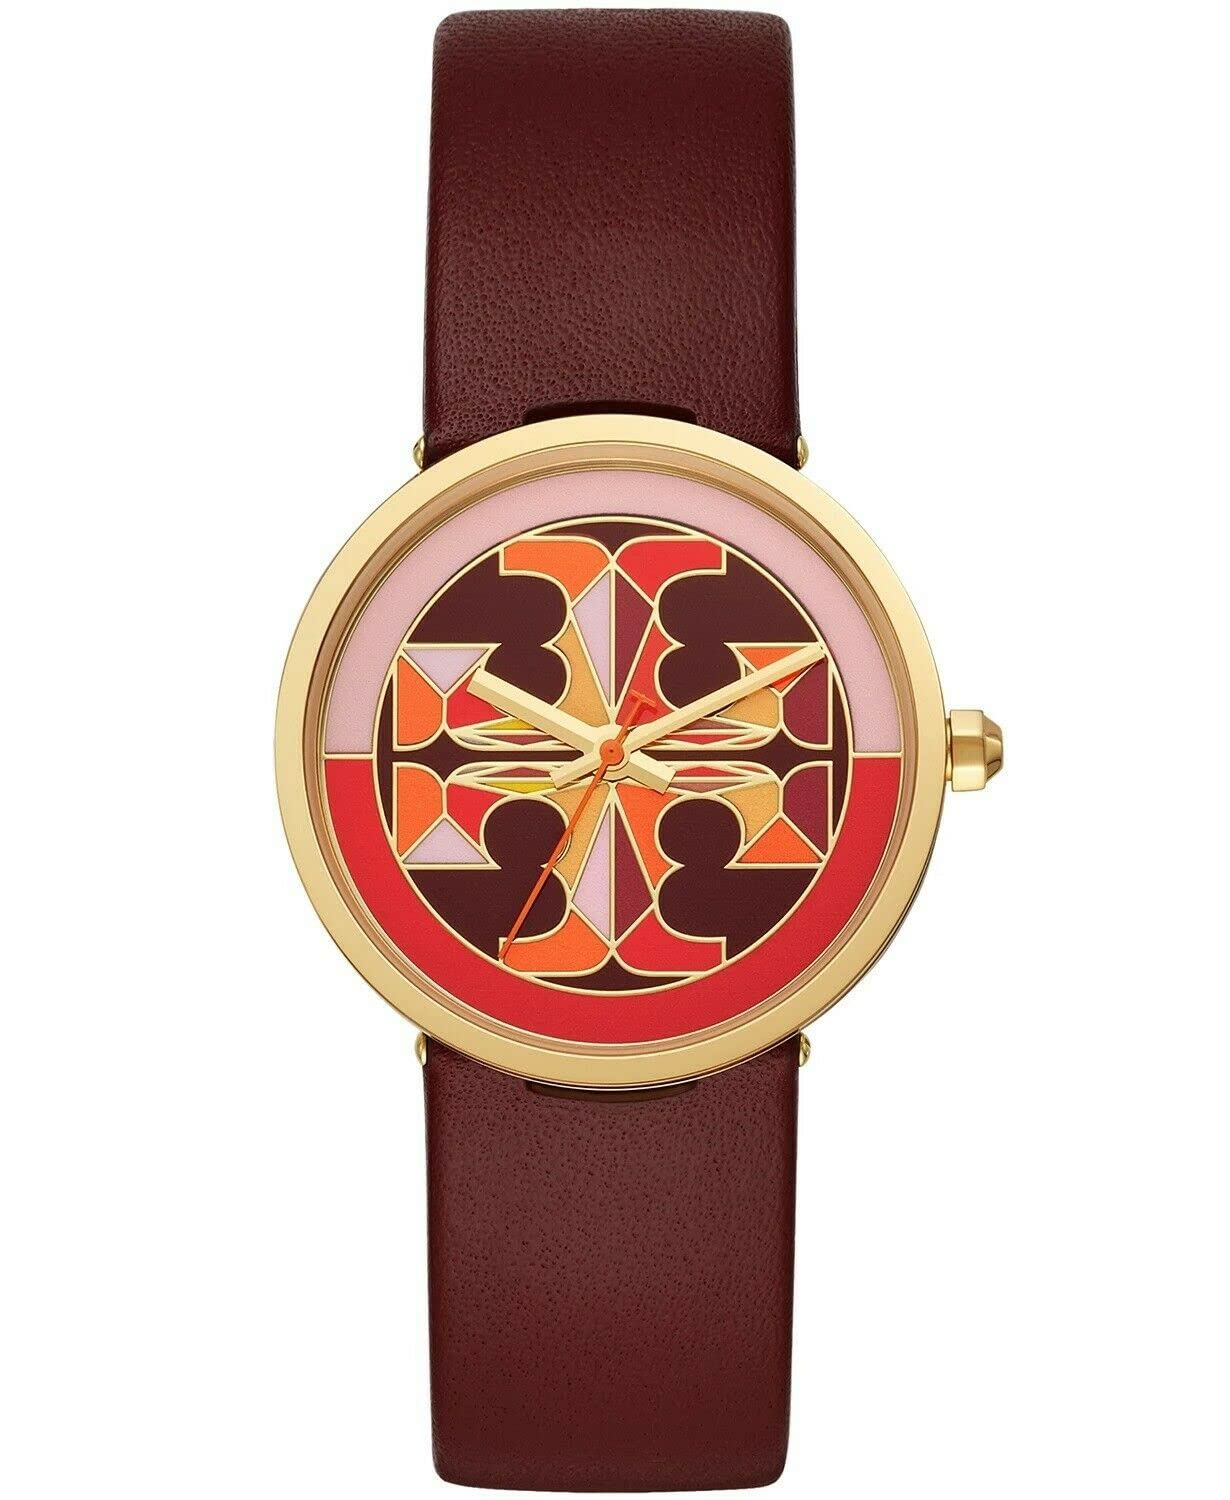 Mua Tory Burch Reva Leather Watch Red - Tbw4041 One Size trên Amazon Mỹ  chính hãng 2023 | Fado